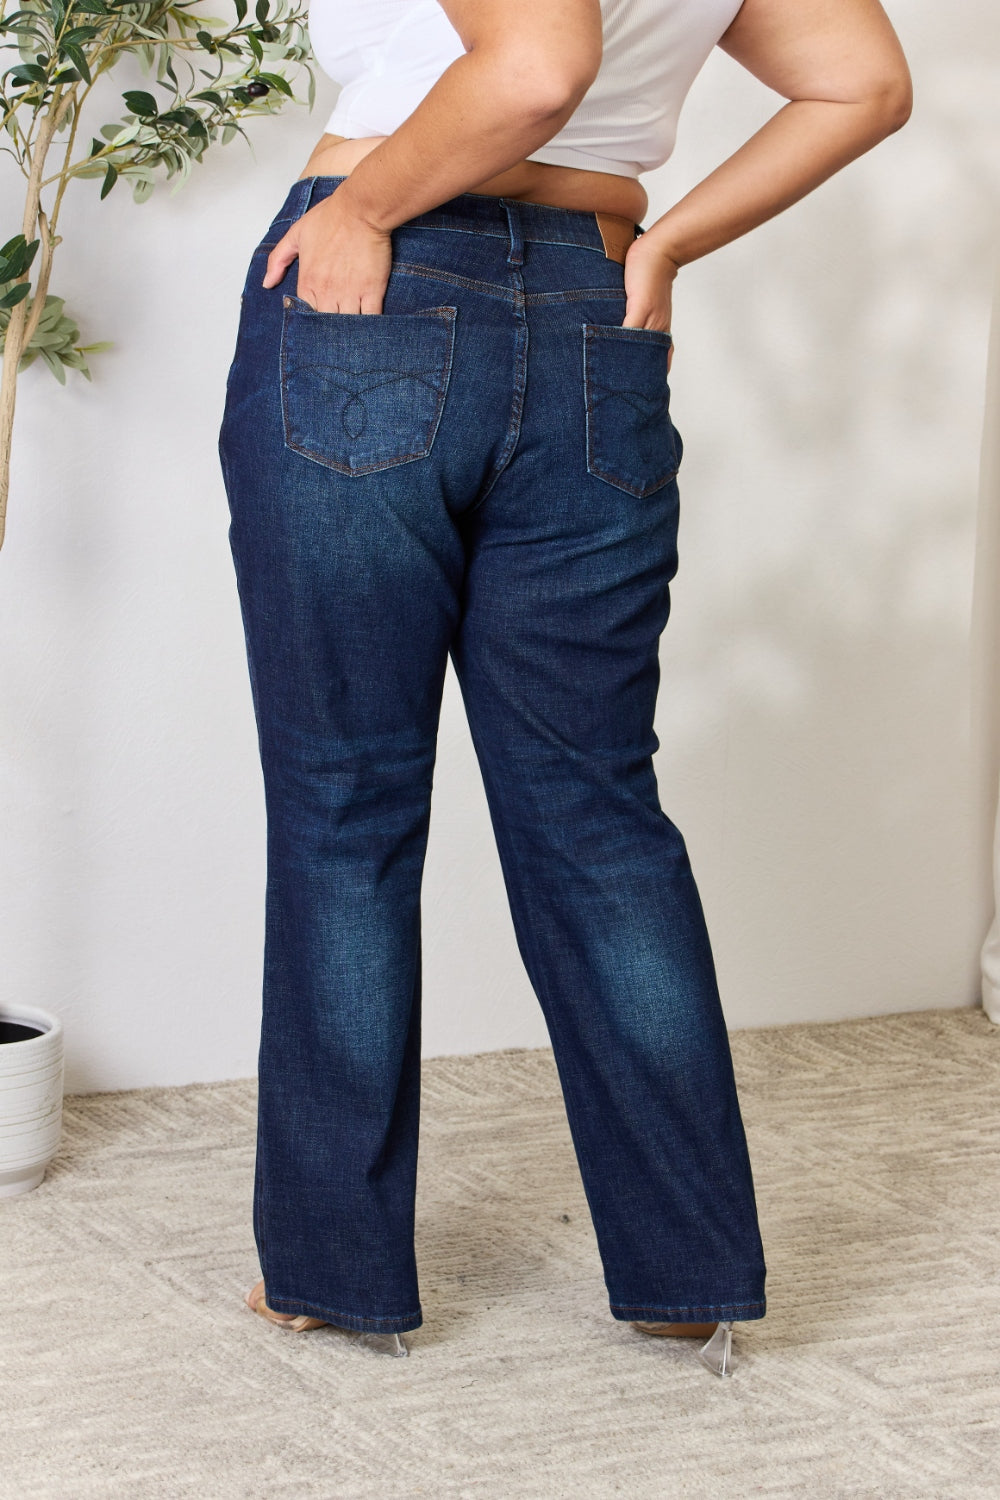 KESLEY Button-Fly Straight Leg Jeans Petite and Plus Size Denim Pants Cotton